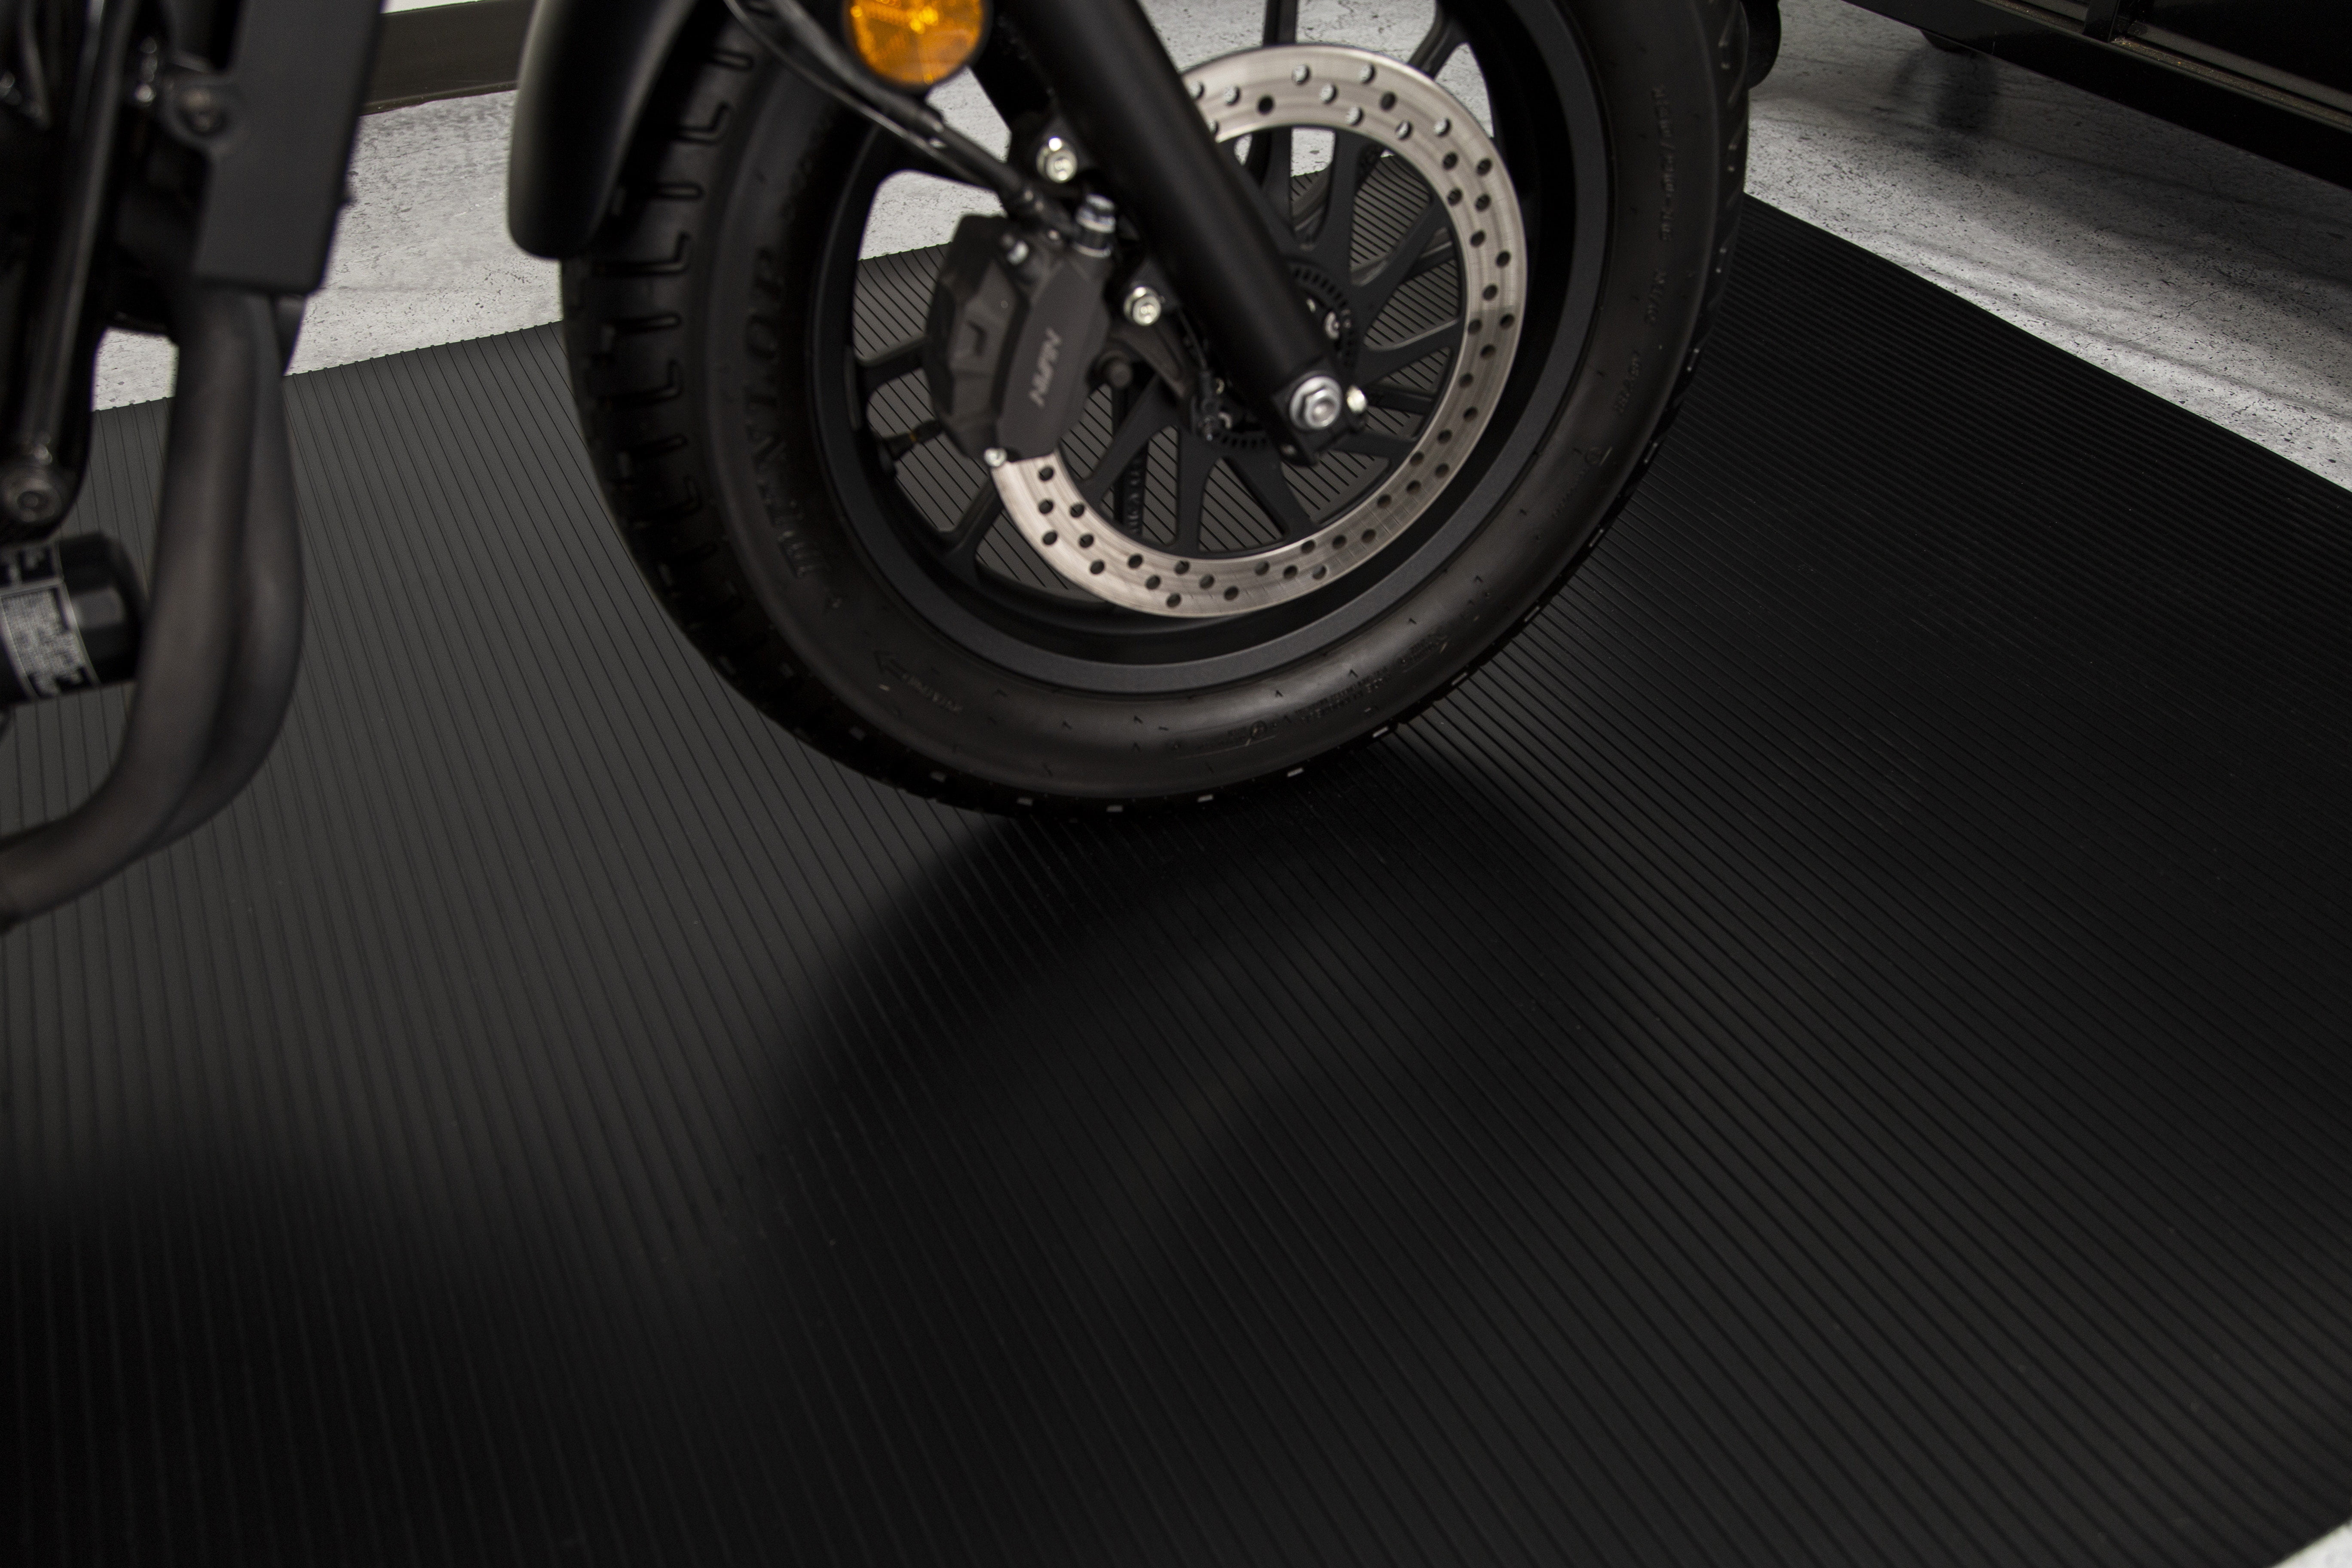 G-Floor Motorcycle Mat, Midnight Black / 5' x 10